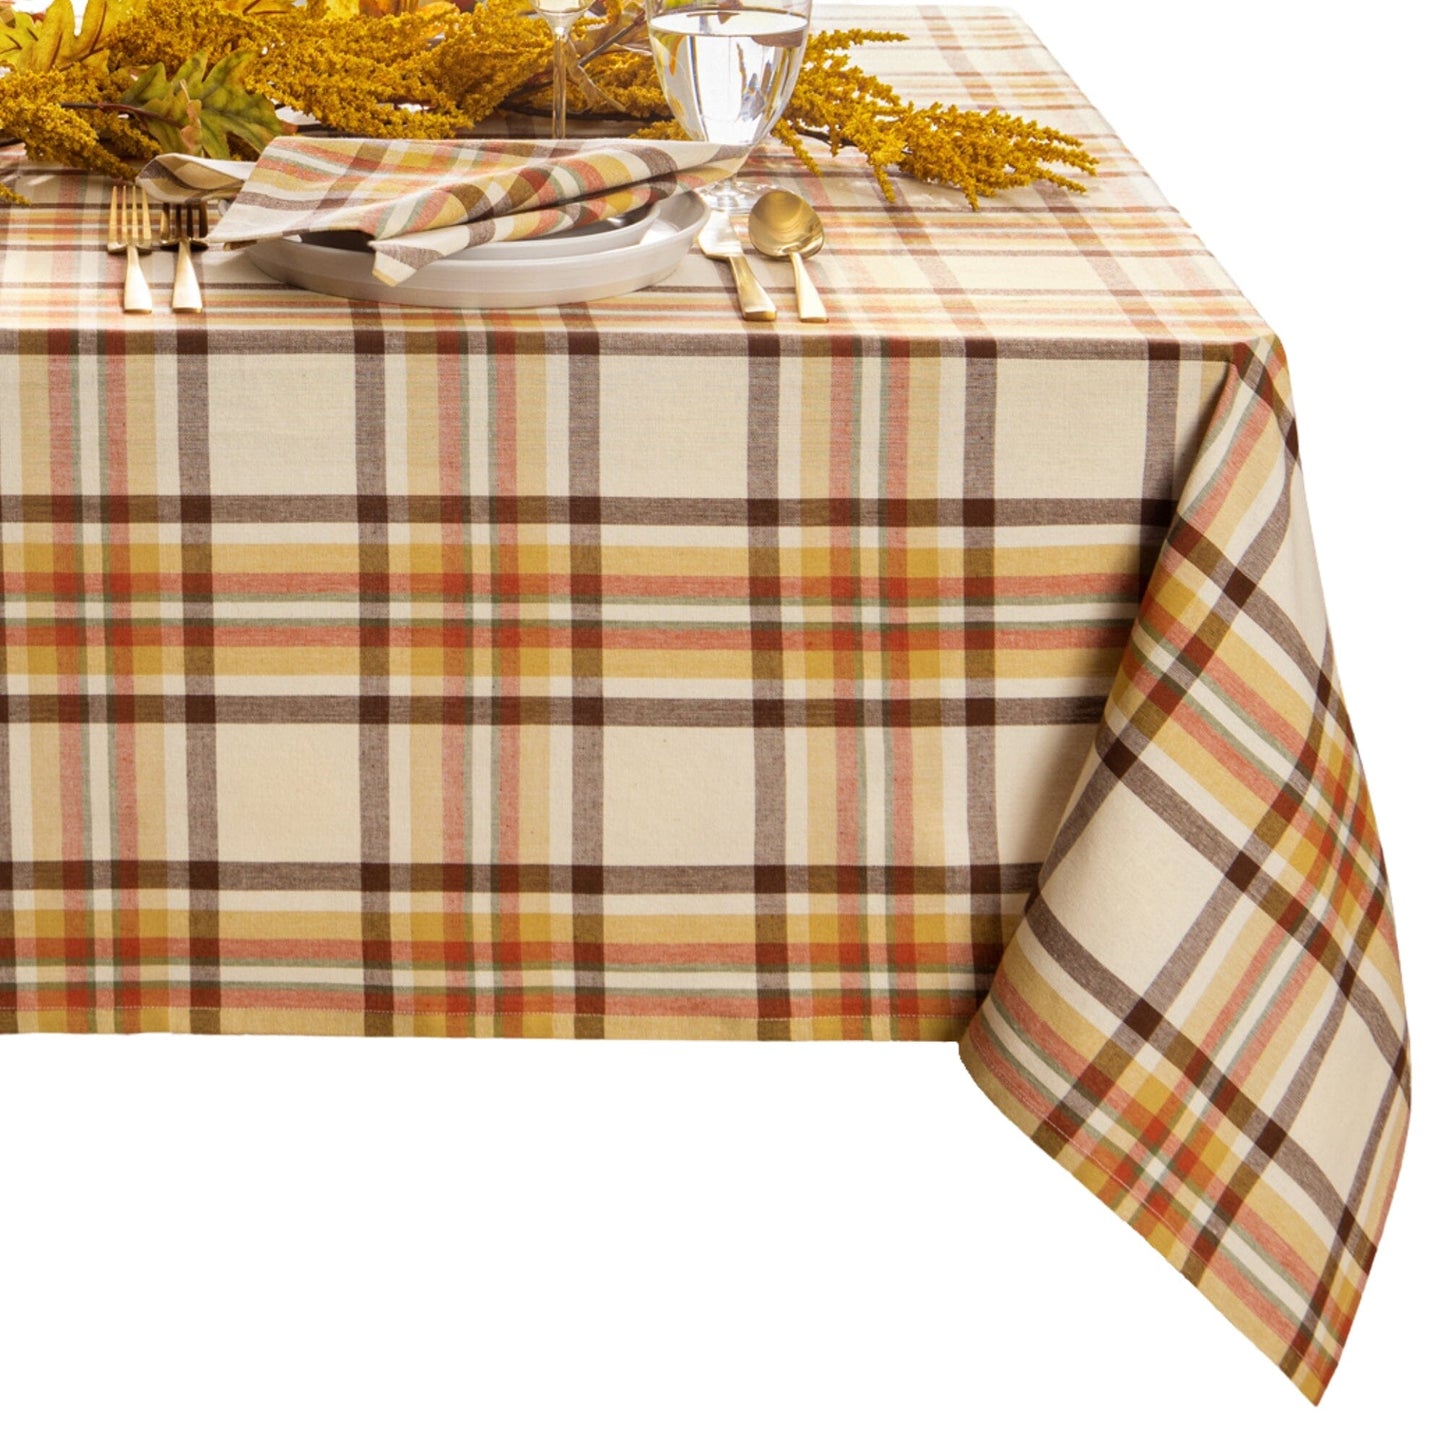 Russet Harvest Woven Plaid Tablecloth